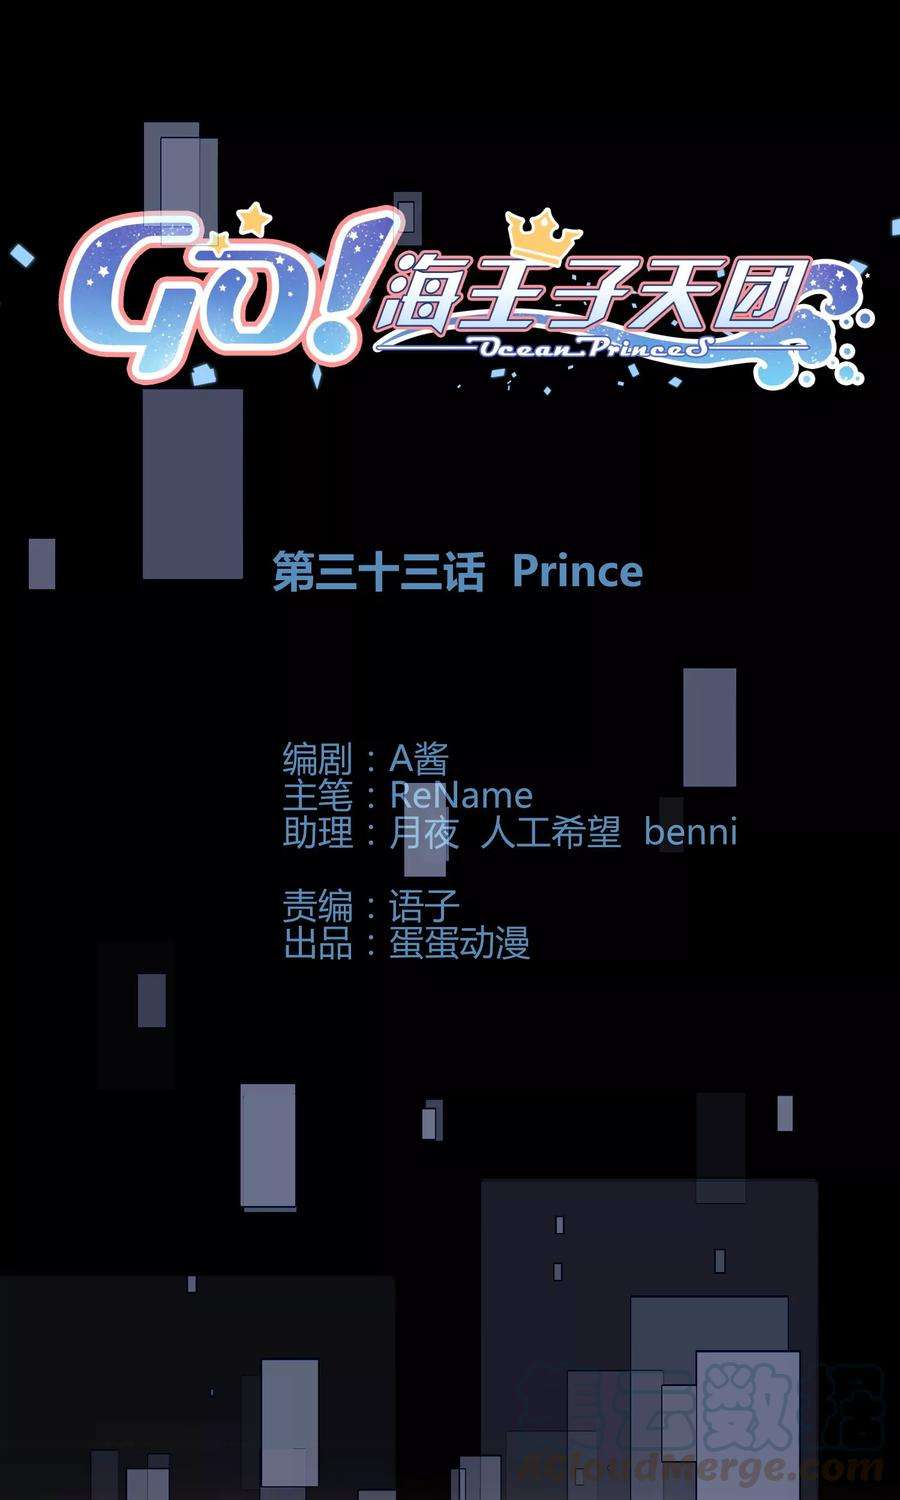 Go!海王子天团33话1 Prince